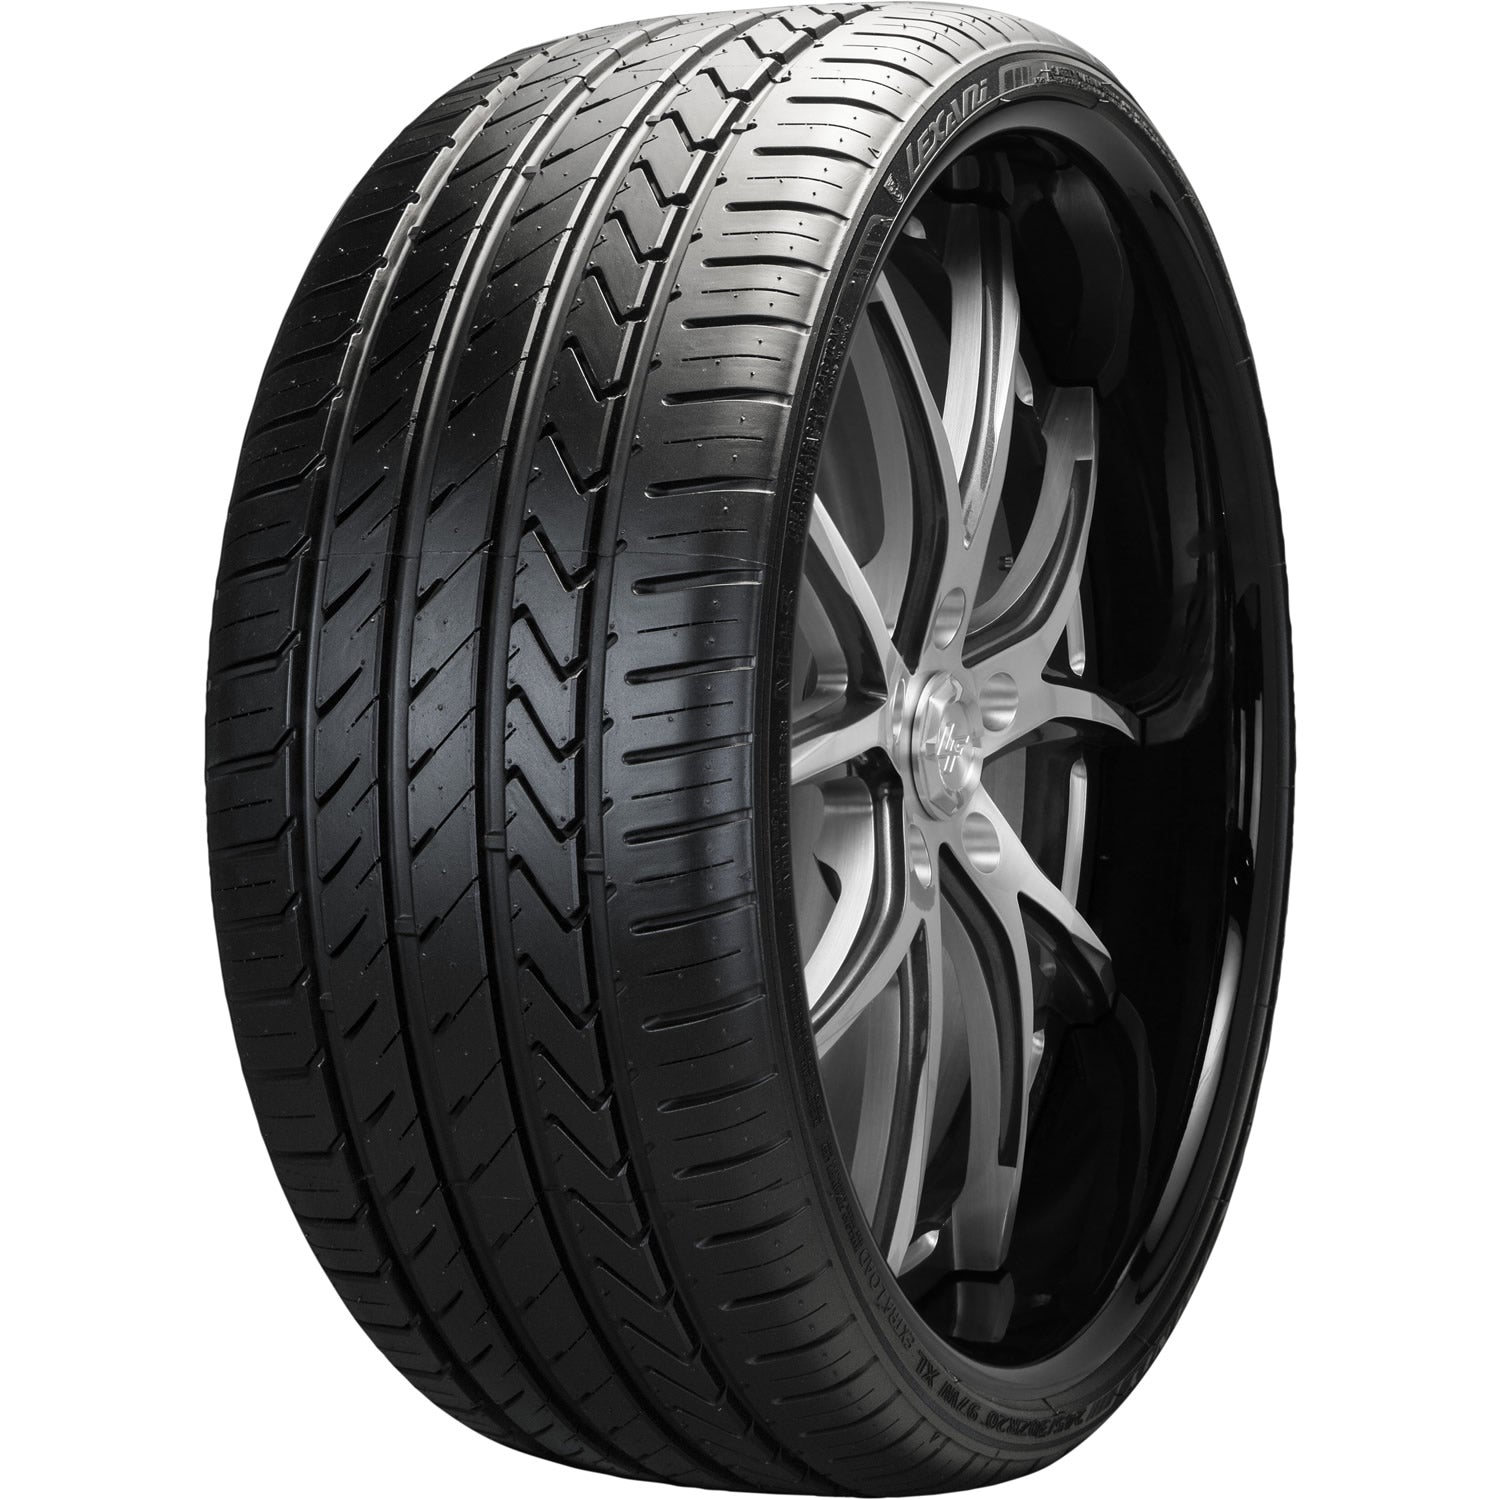 LEXANI LX-TWENTY 285/25ZR22 (27.6X11.6R 22) Tires